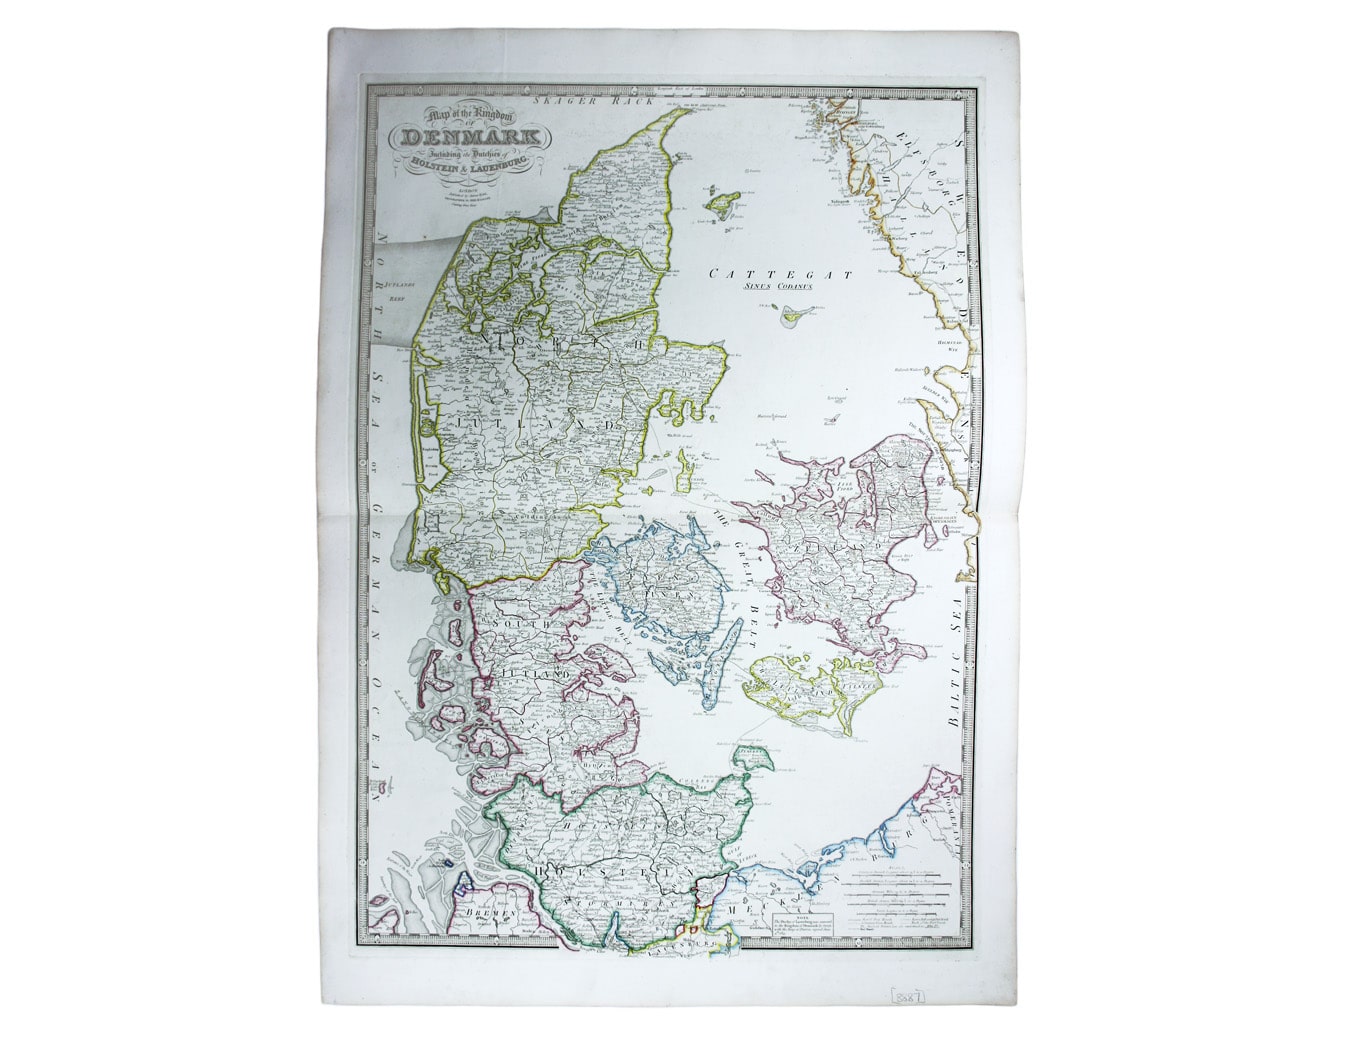 Wyld’s Map of Denmark